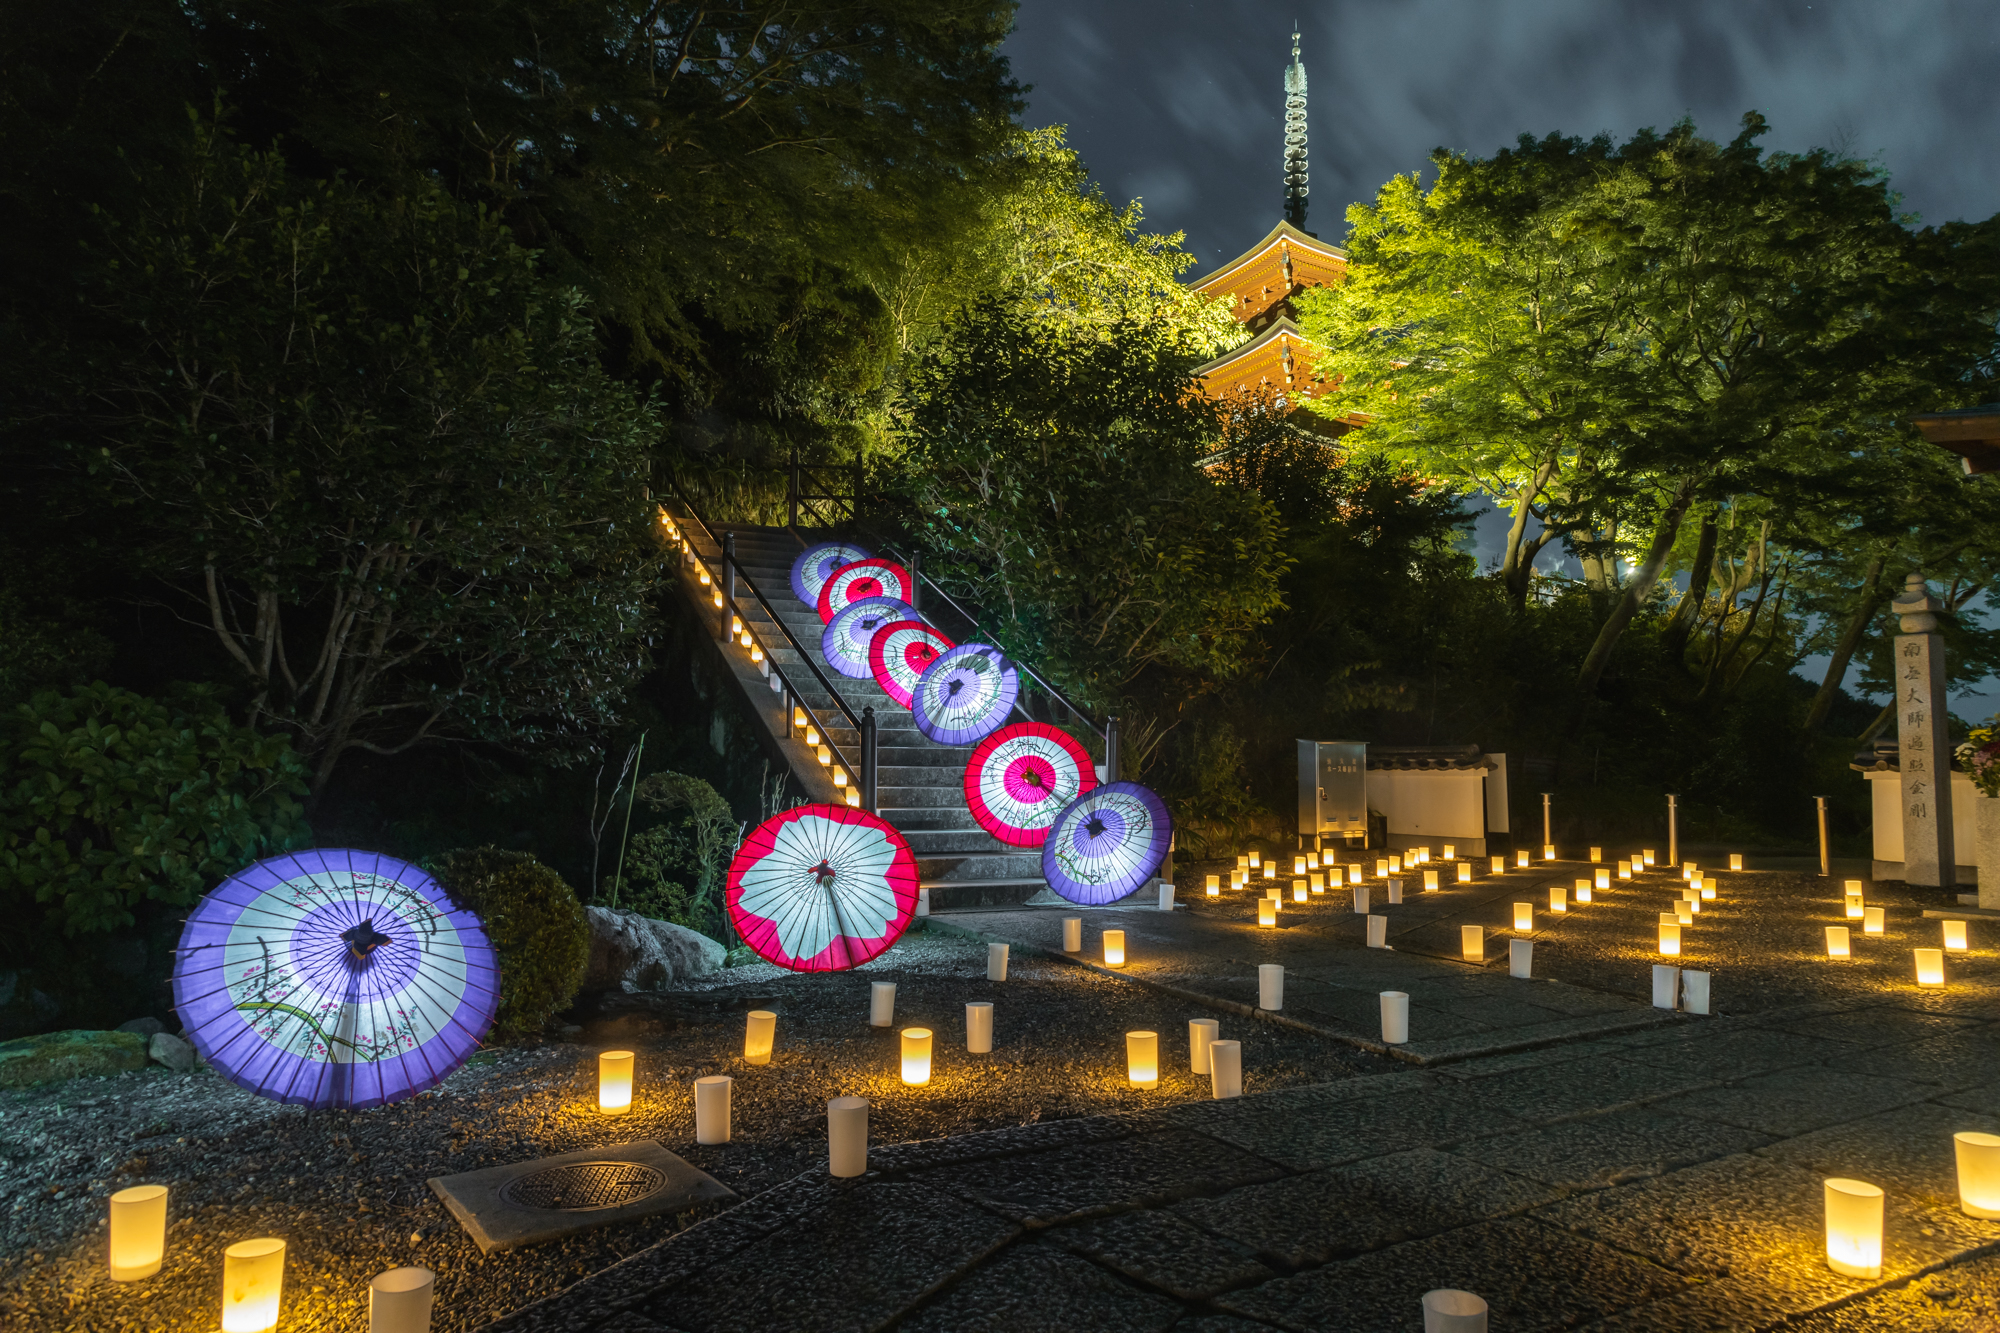 NIKON-CORPORATION_NIKON-D850_2888408242-2888509654_21350-1 奈良県　明日香村 飛鳥光の回廊( 奈良県の秋におすすめの幻想的なライトアップ・夜景が観れる写真スポット!撮影した写真の紹介、アクセス情報や撮影ポイントなど!)　